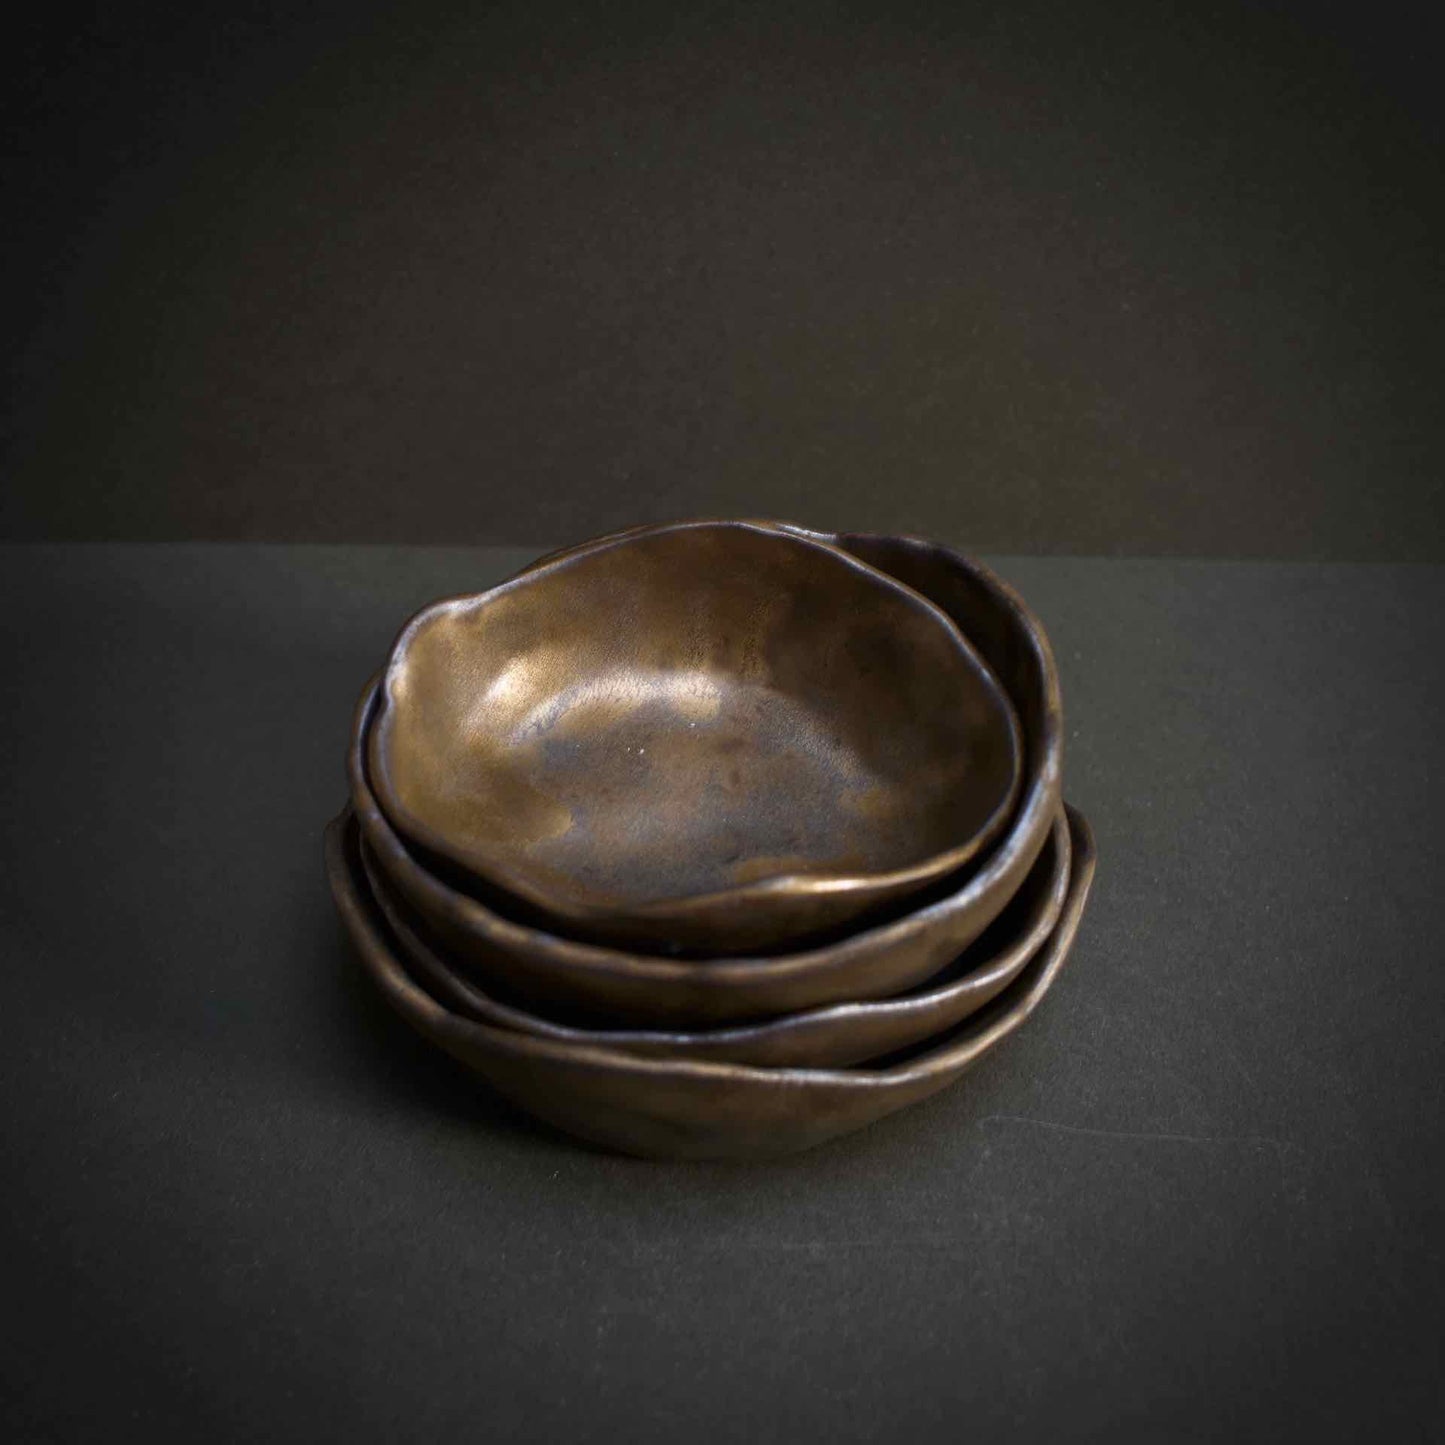 Bronze organic shaped bowls